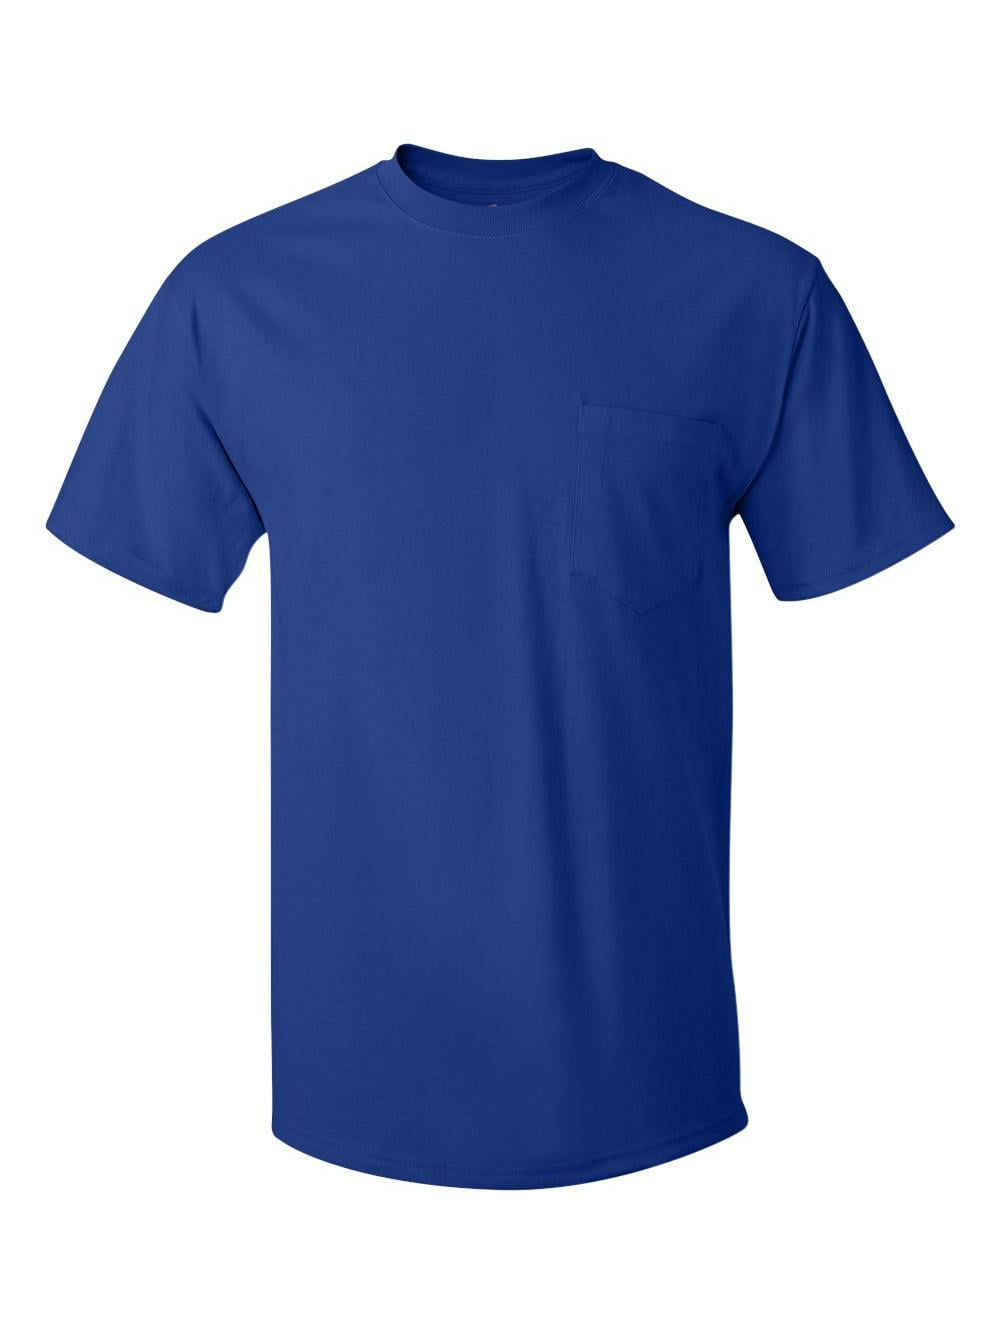 Hanes - T-Shirts Tagless T-Shirt with a Pocket - Walmart.com